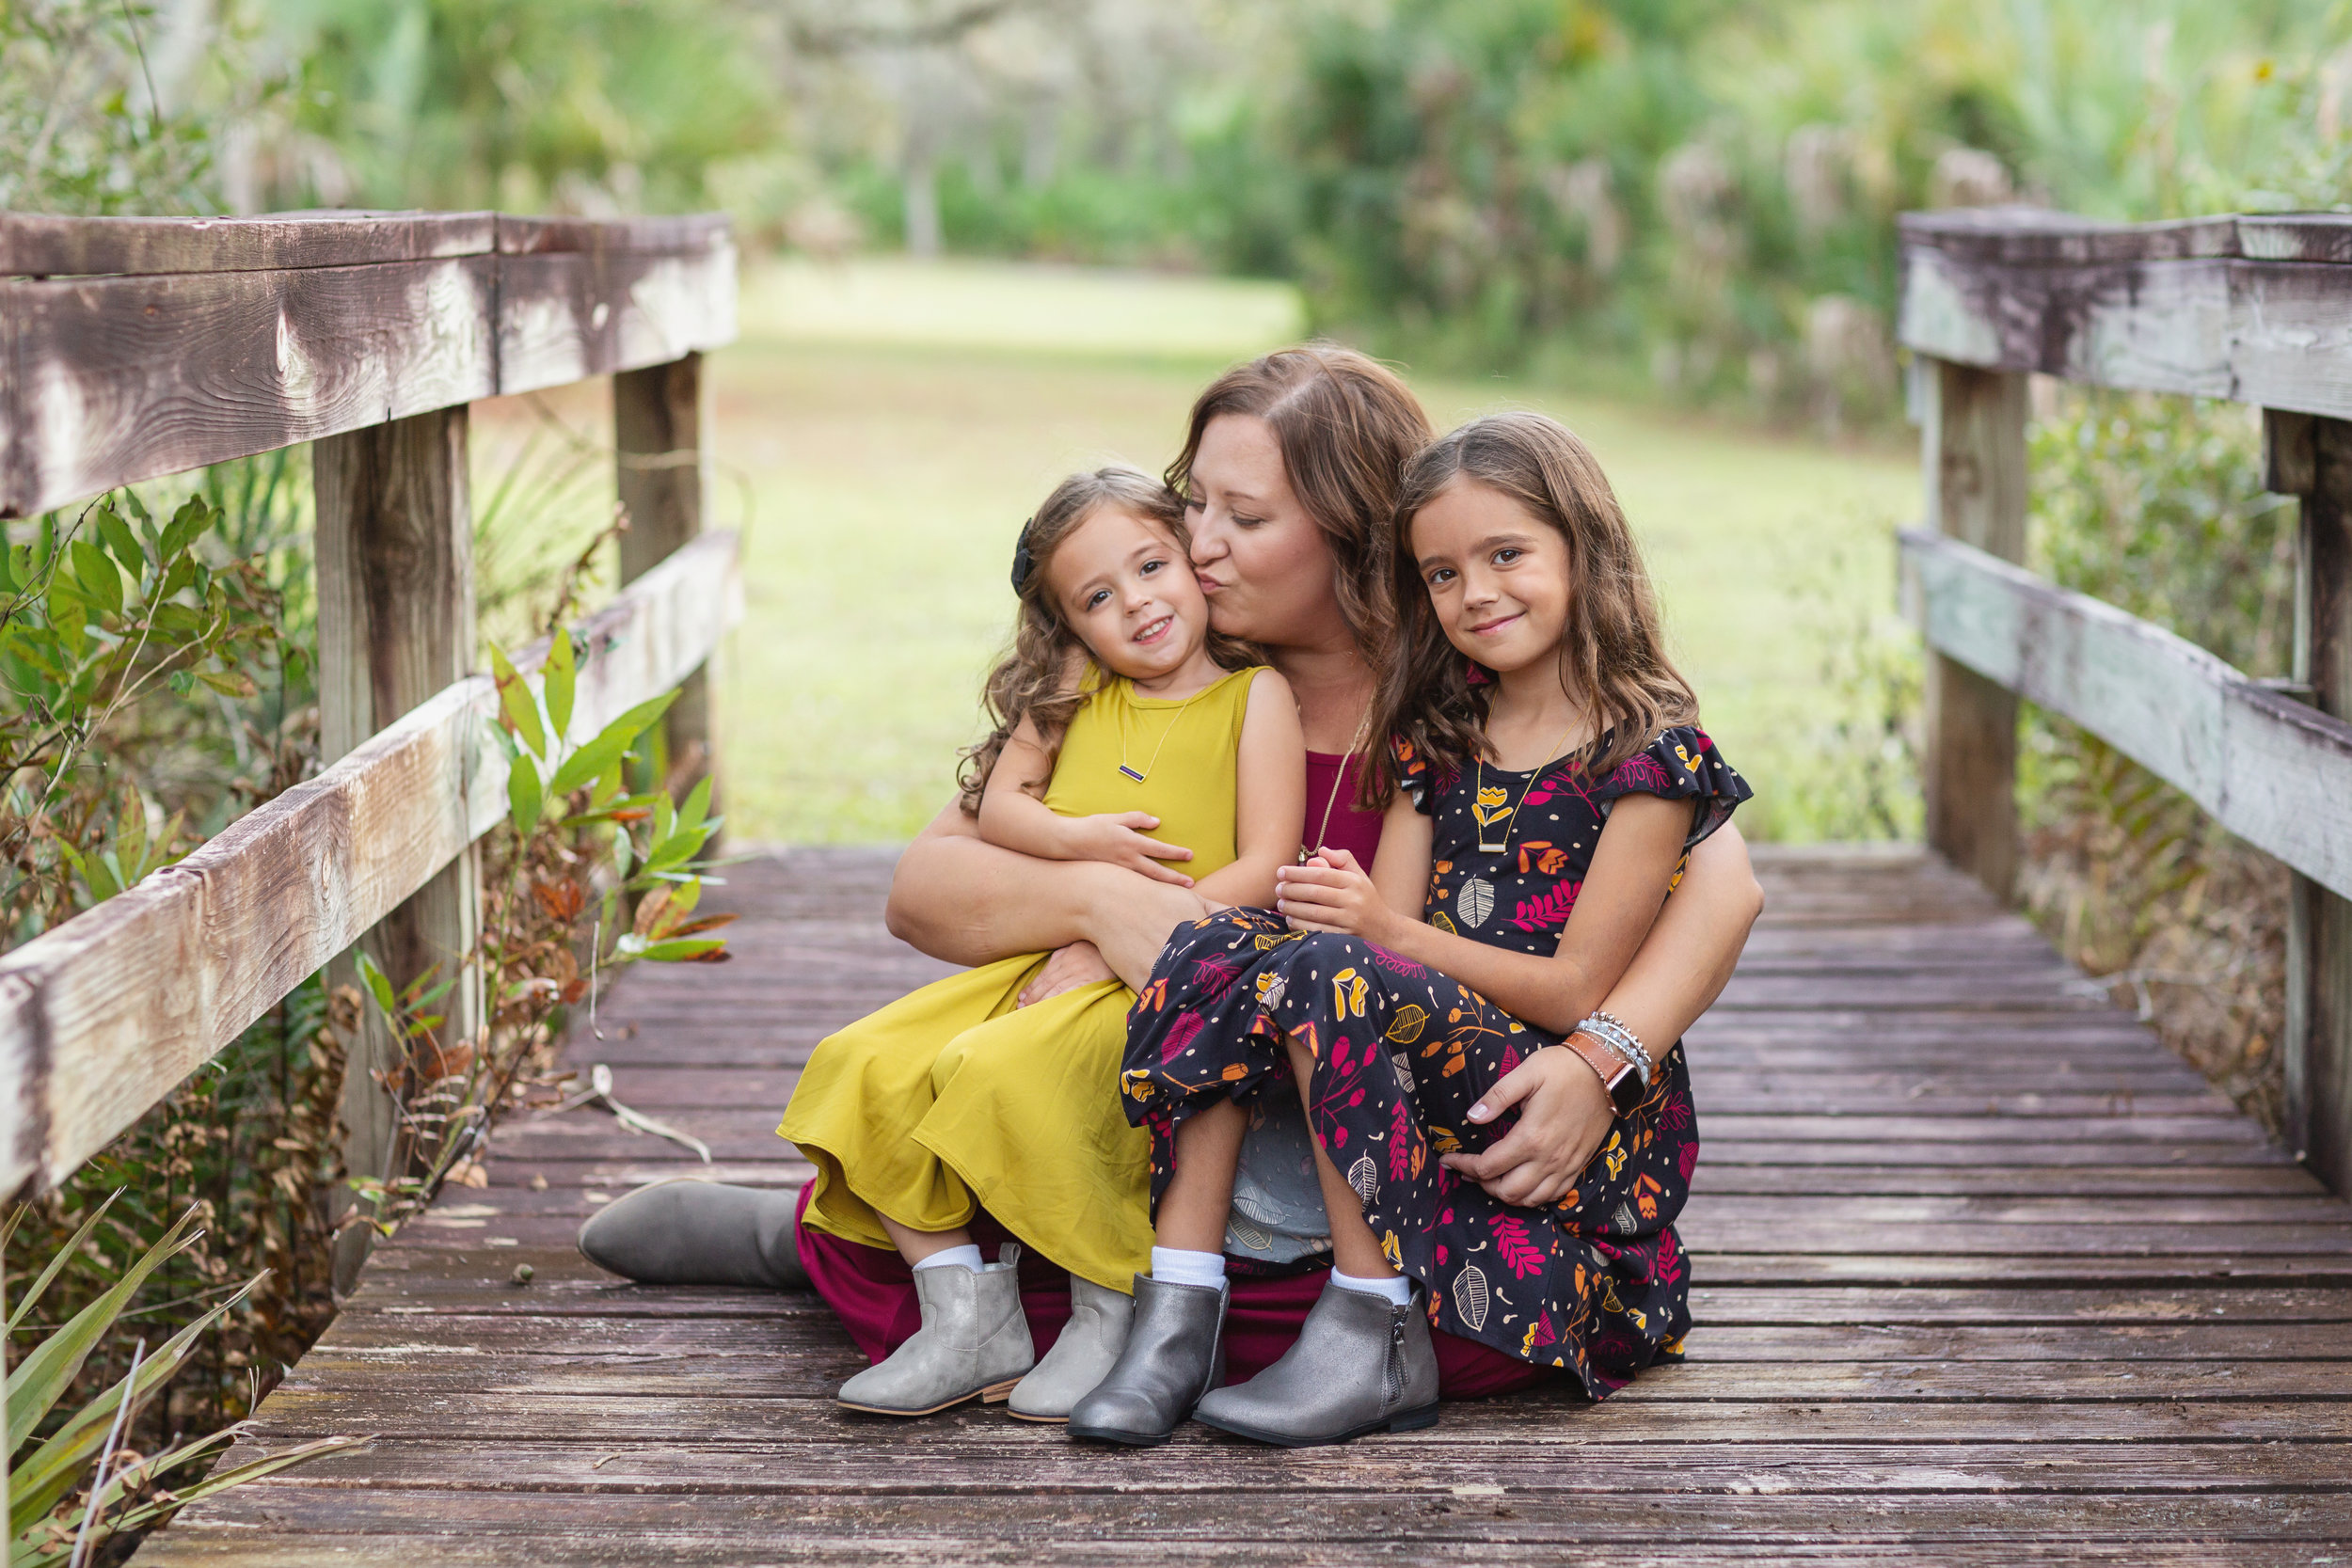 Vero Beach Family Photography - Mommy and Daughter Photos, Sister Photos